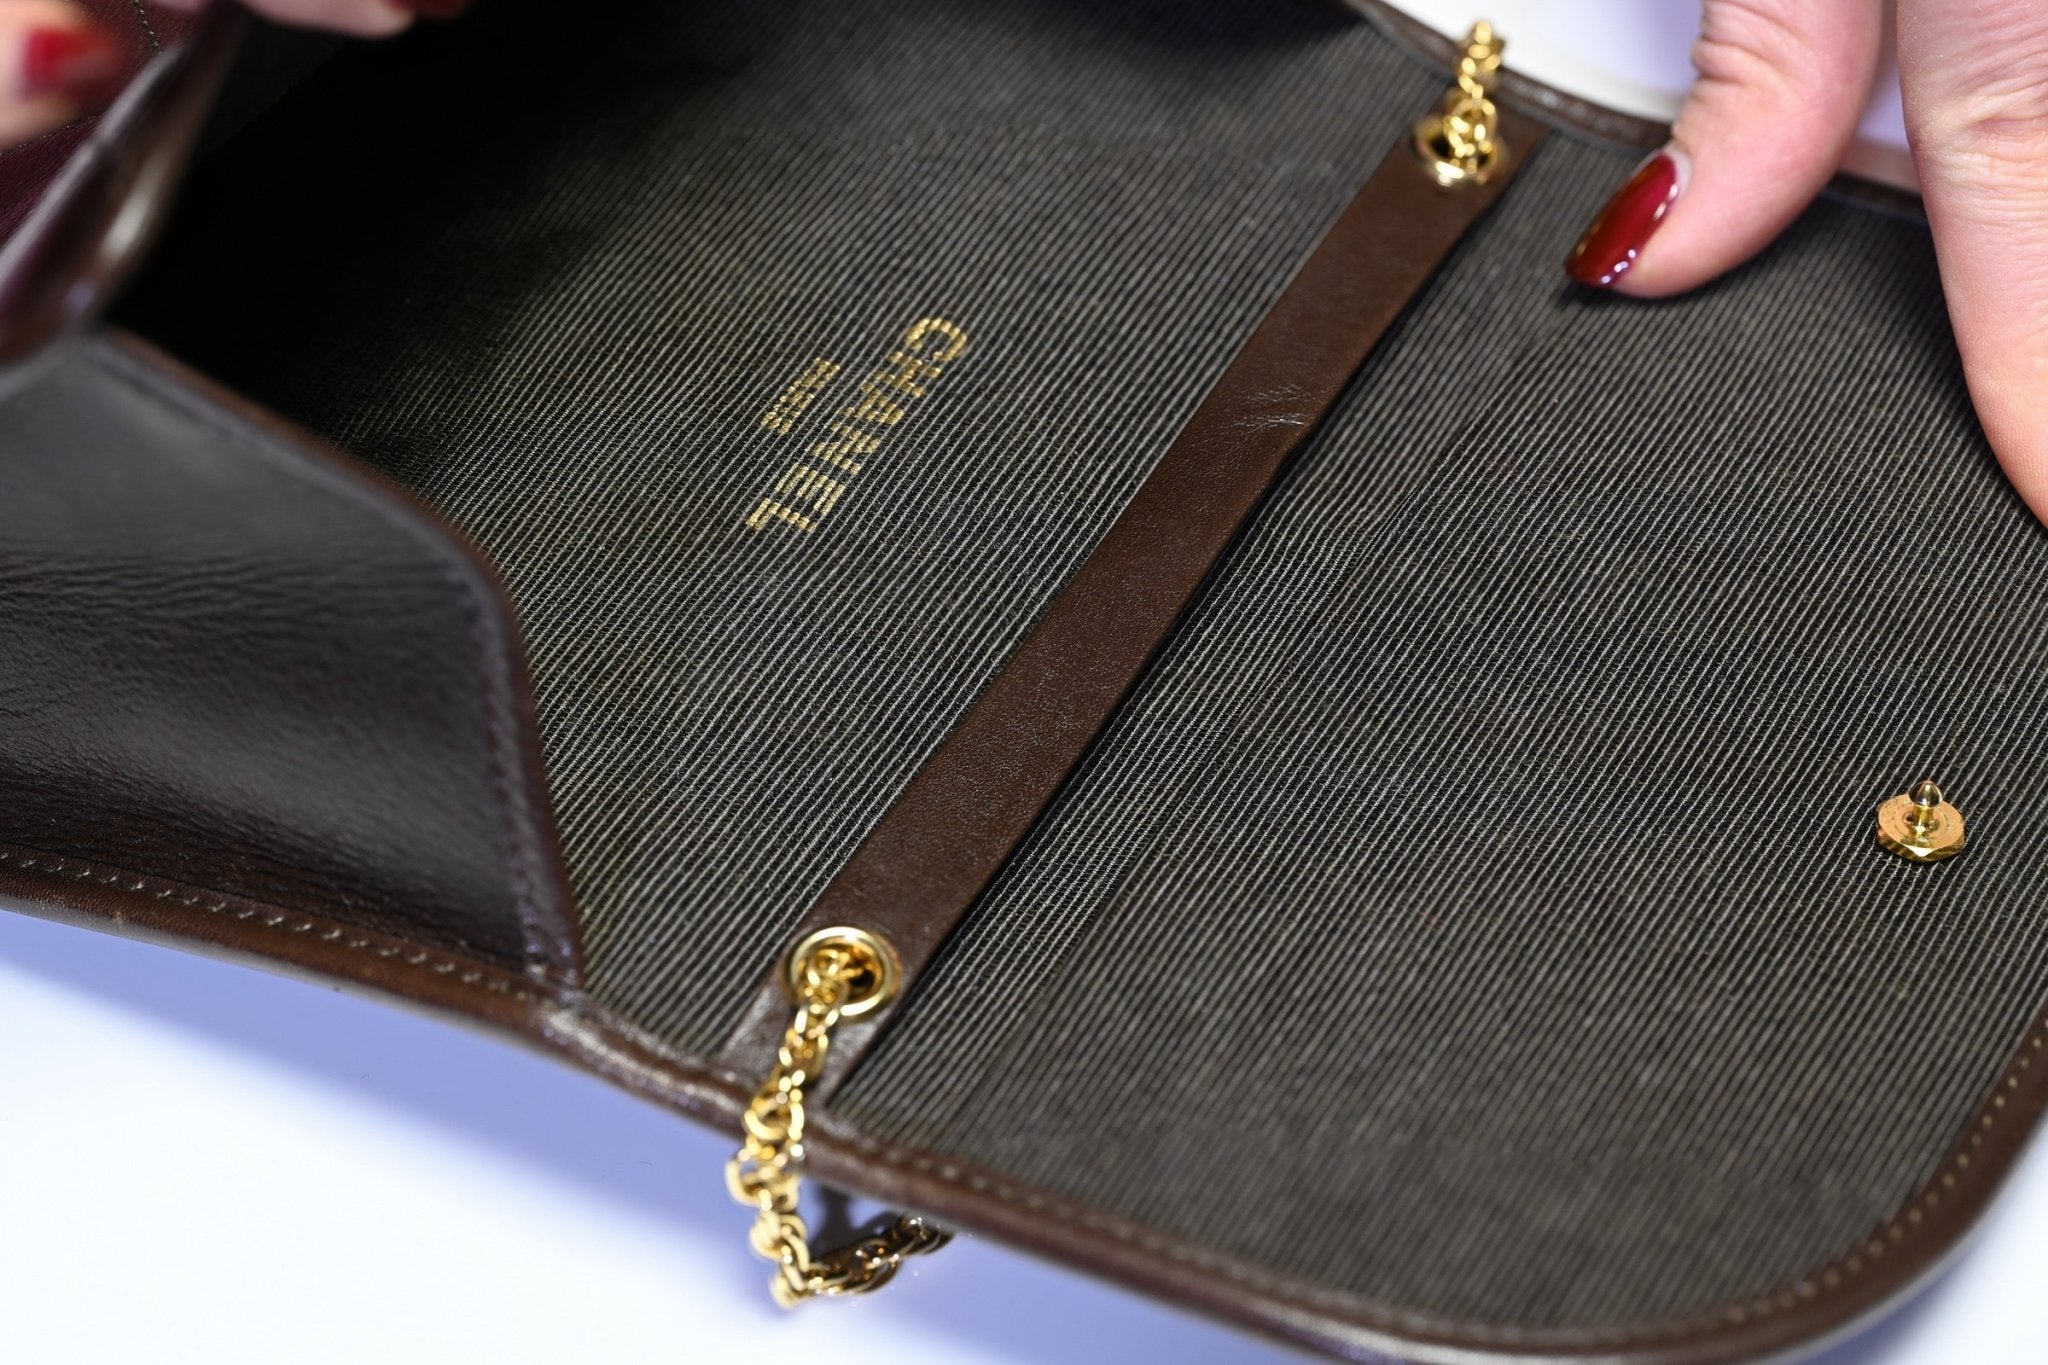 Vintage Chanel Paris Brown Quilted Leather CC Mini Flap Clutch Crossbody Bag